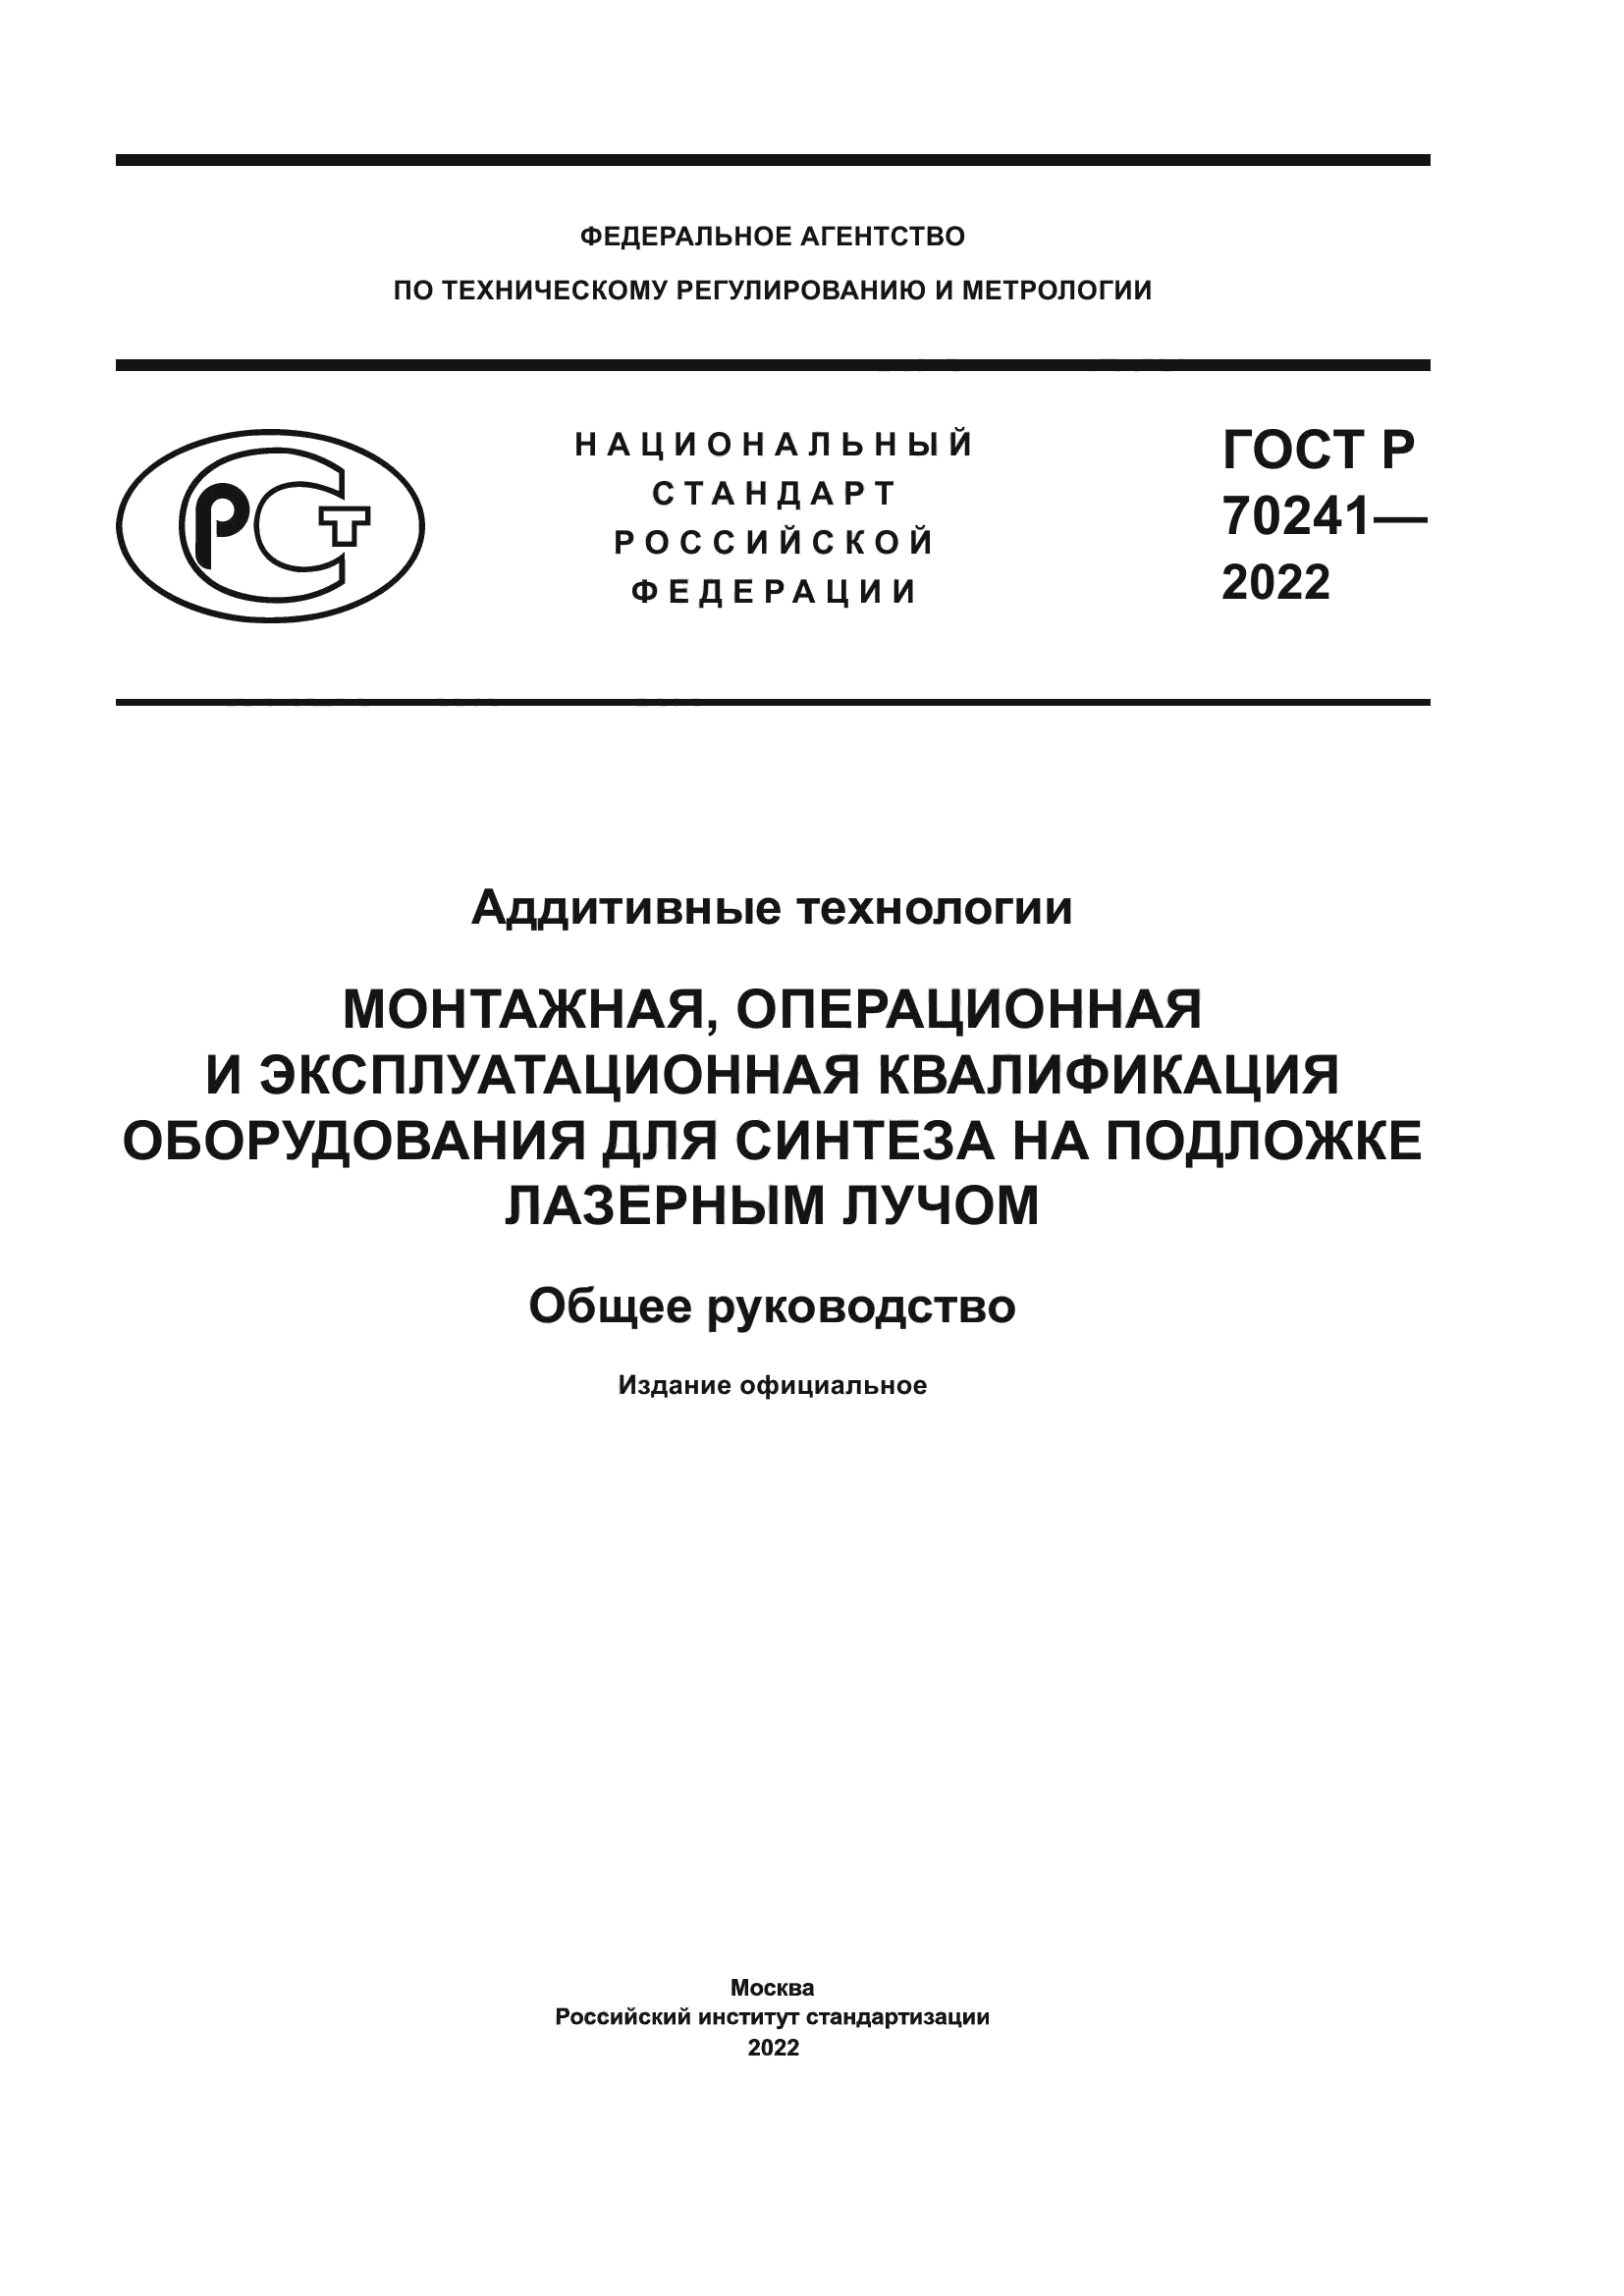 ГОСТ Р 70241-2022